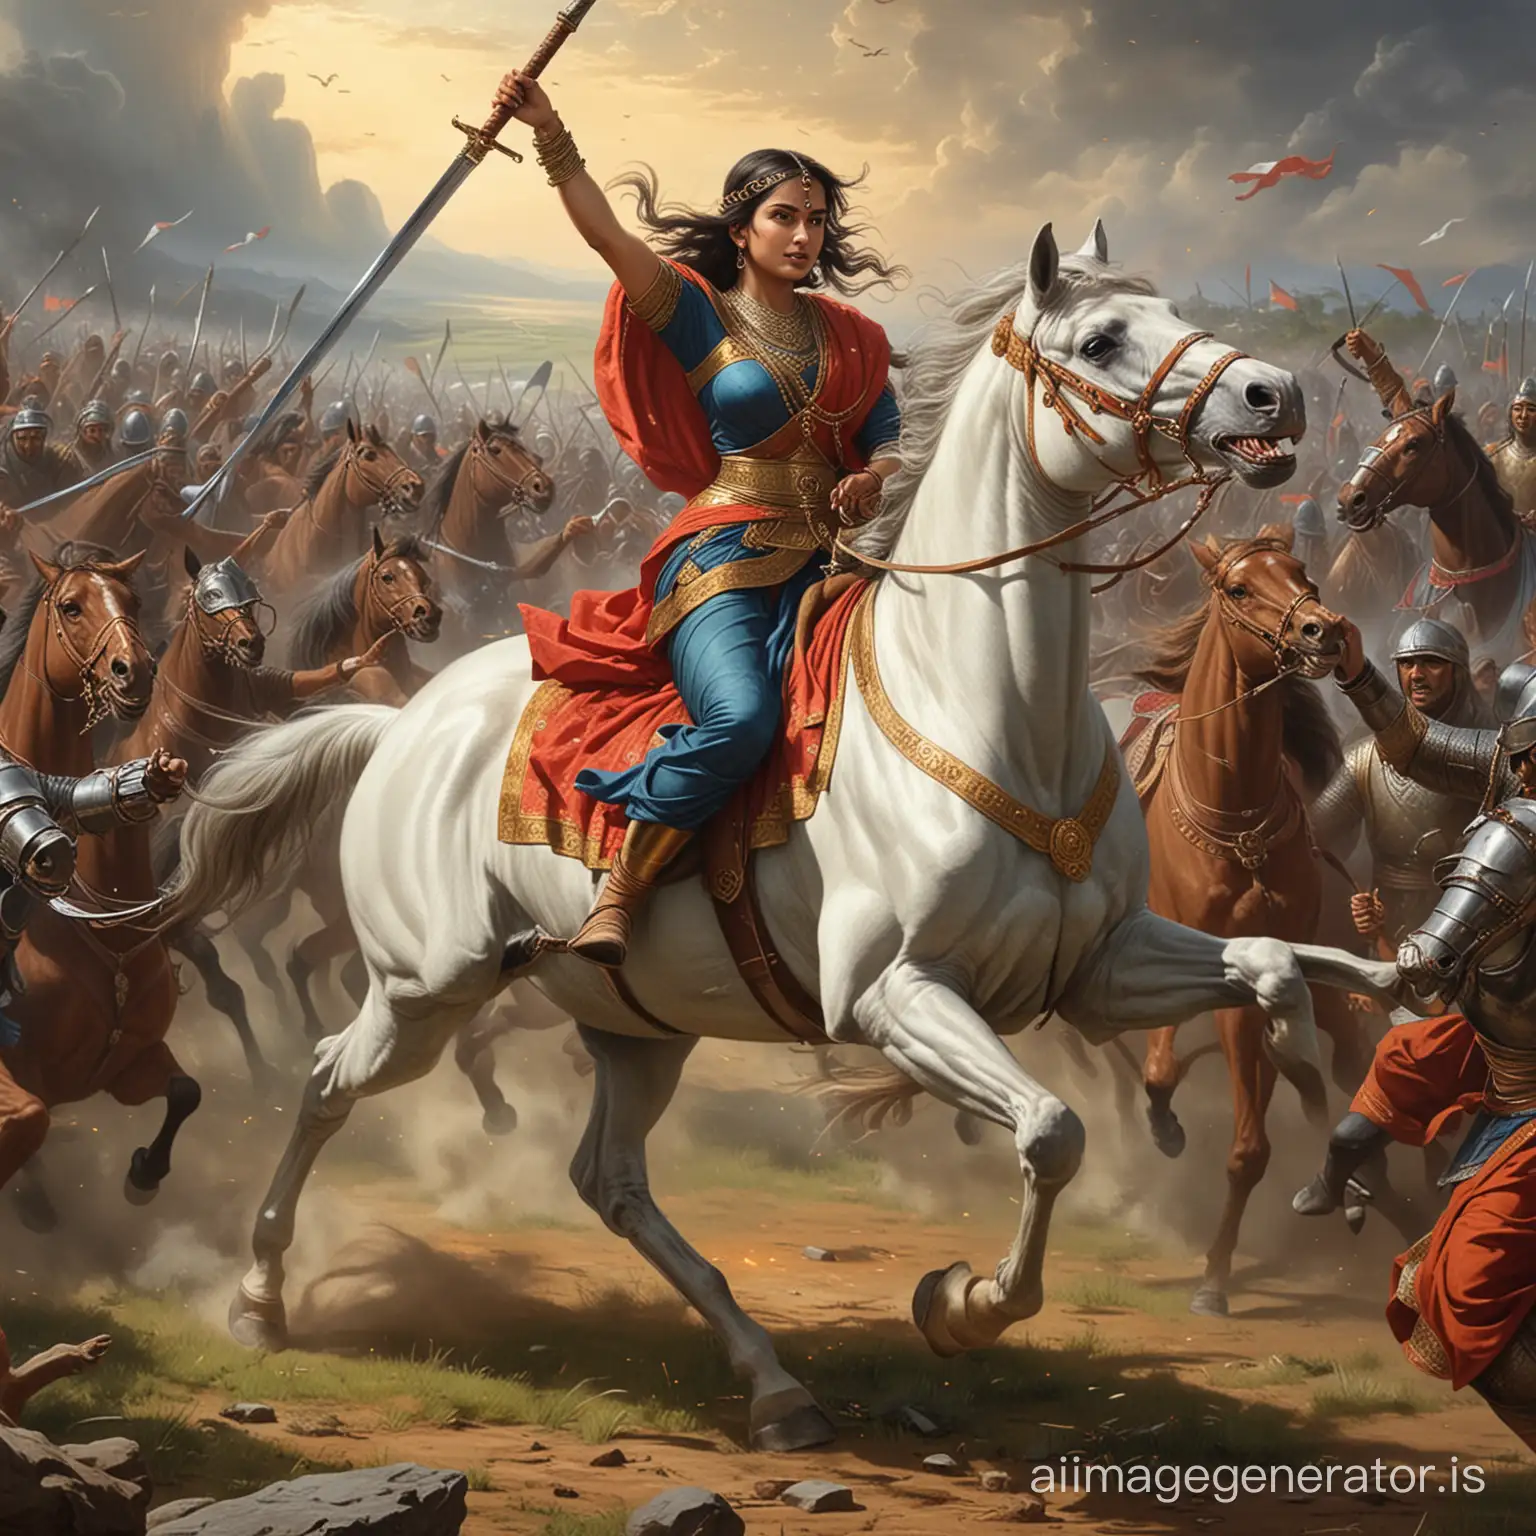 Nari durgavati on horse in battle with sword